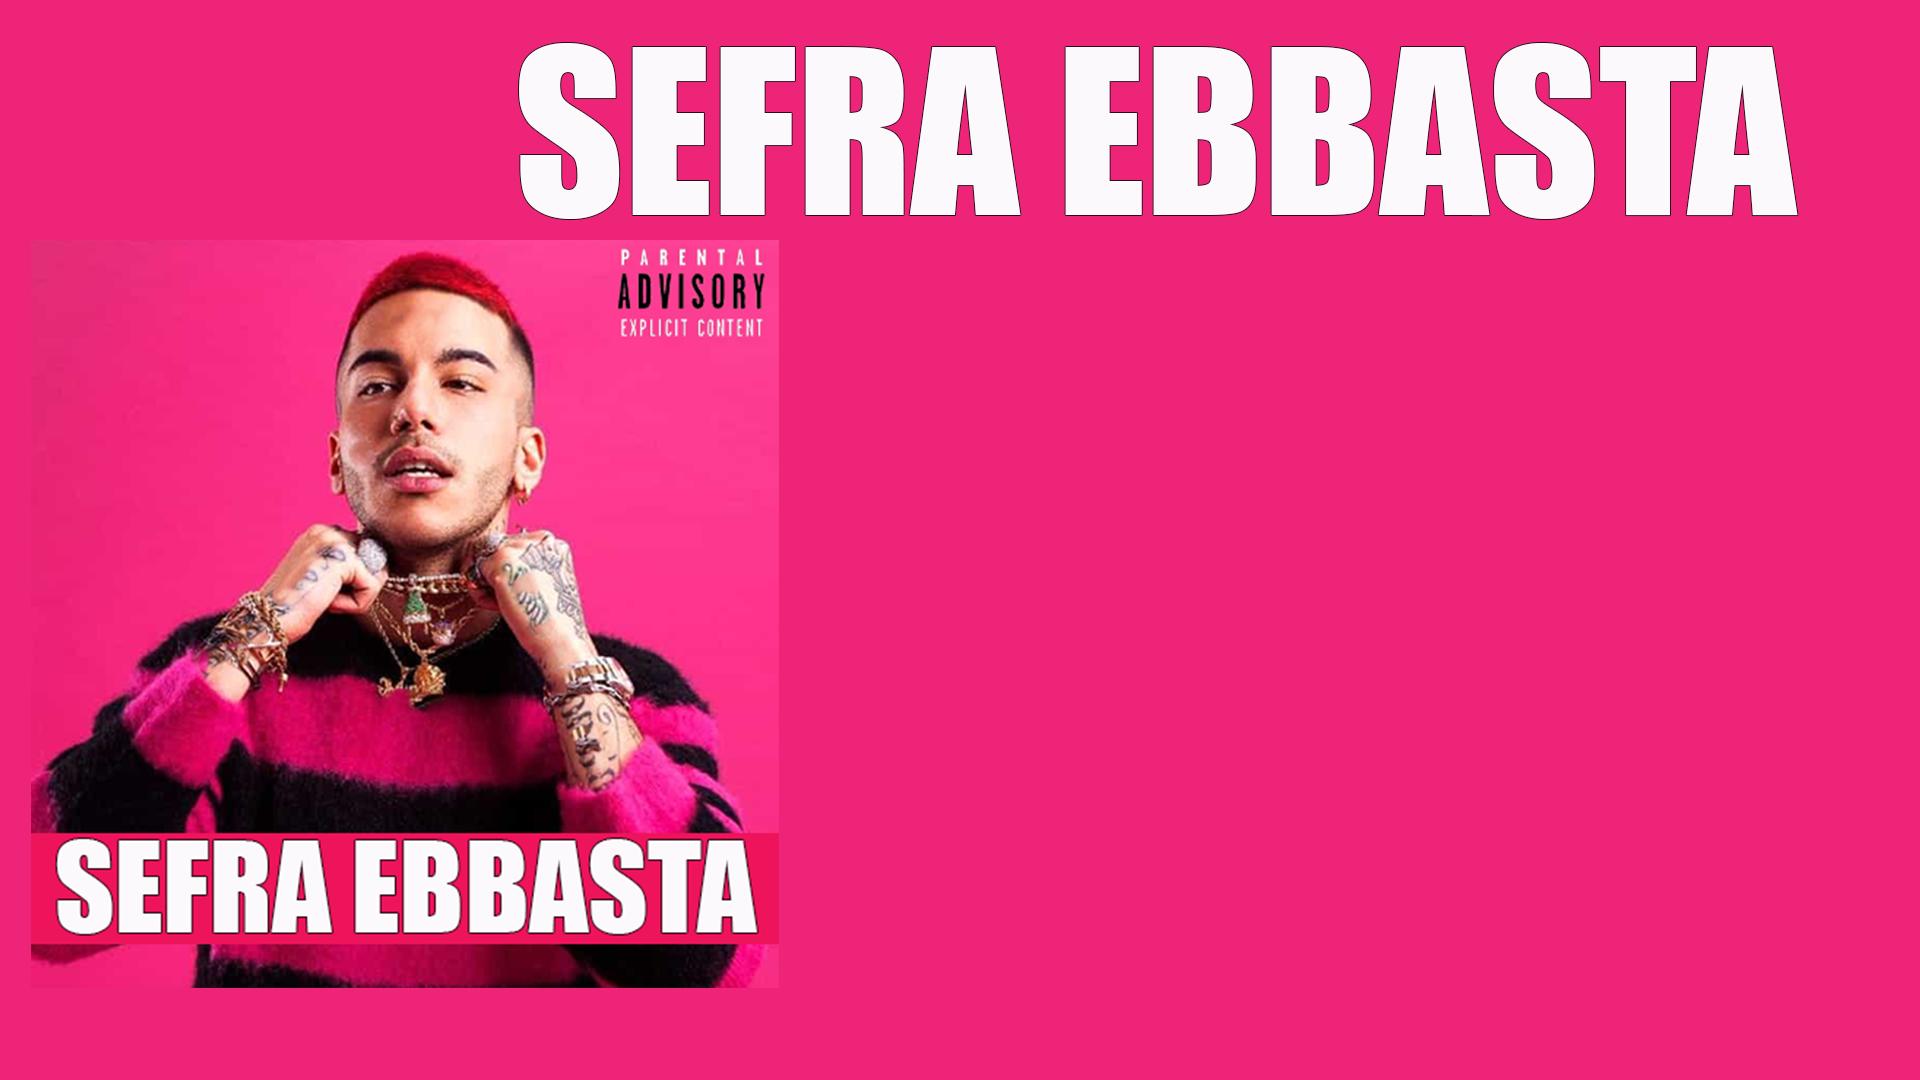 Sfera Ebbasta Musica - سفيرا 2020 for Android - APK Download